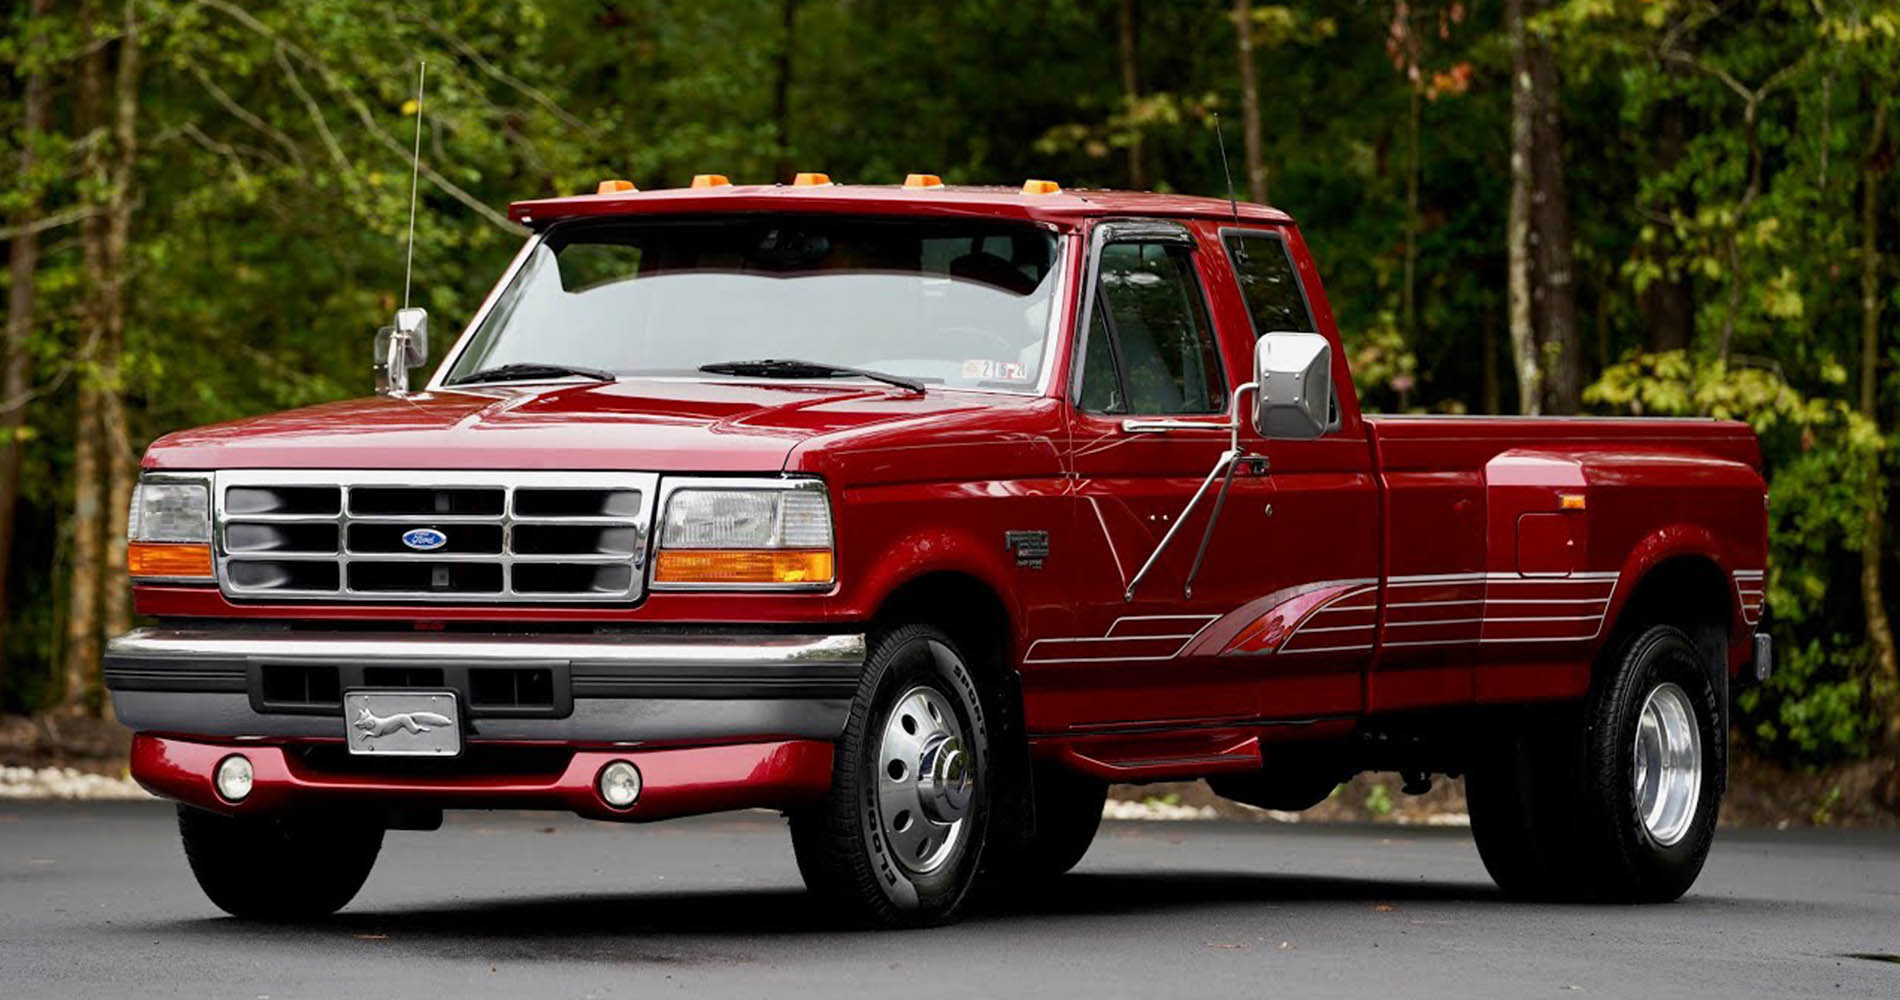 1995 Red Ford F-350 7.3 Power Stroke diesel pickup